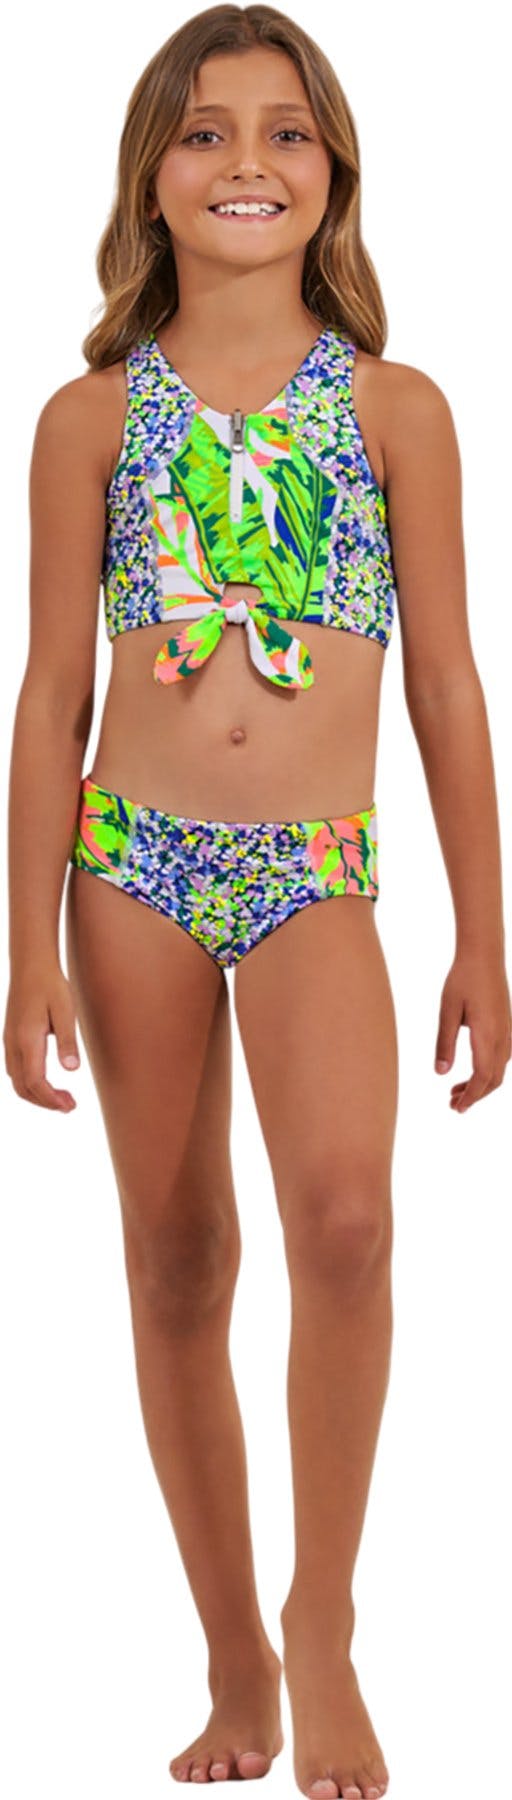 Product image for Candi Greenleaf Bikini Set - Girls